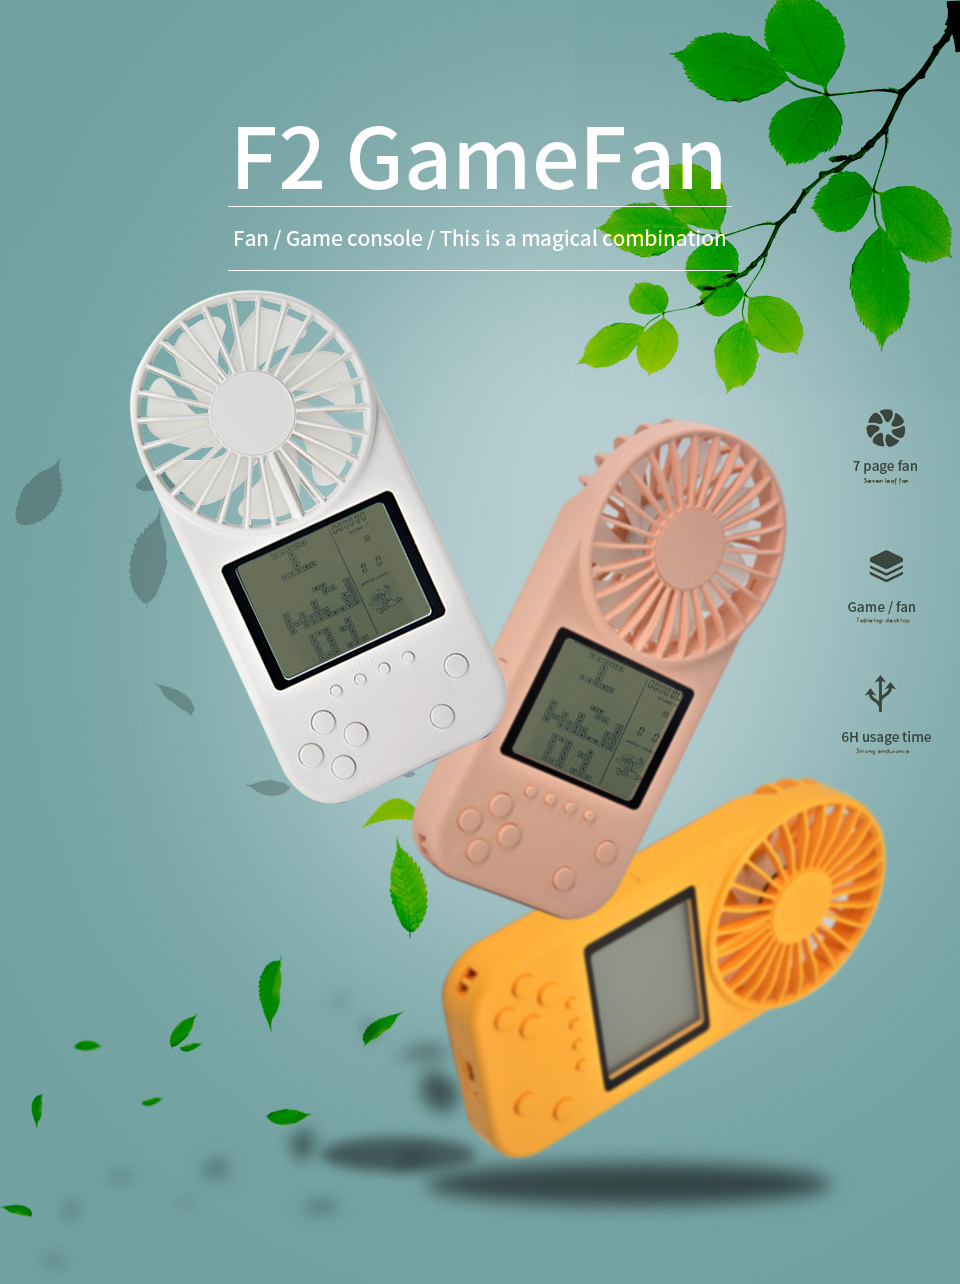 26-Games-Video-Console-Third-Gear-Mini-USB-Fan-Retro-Handheld-Game-Player-Summer-Portable-Fan-1693621-1